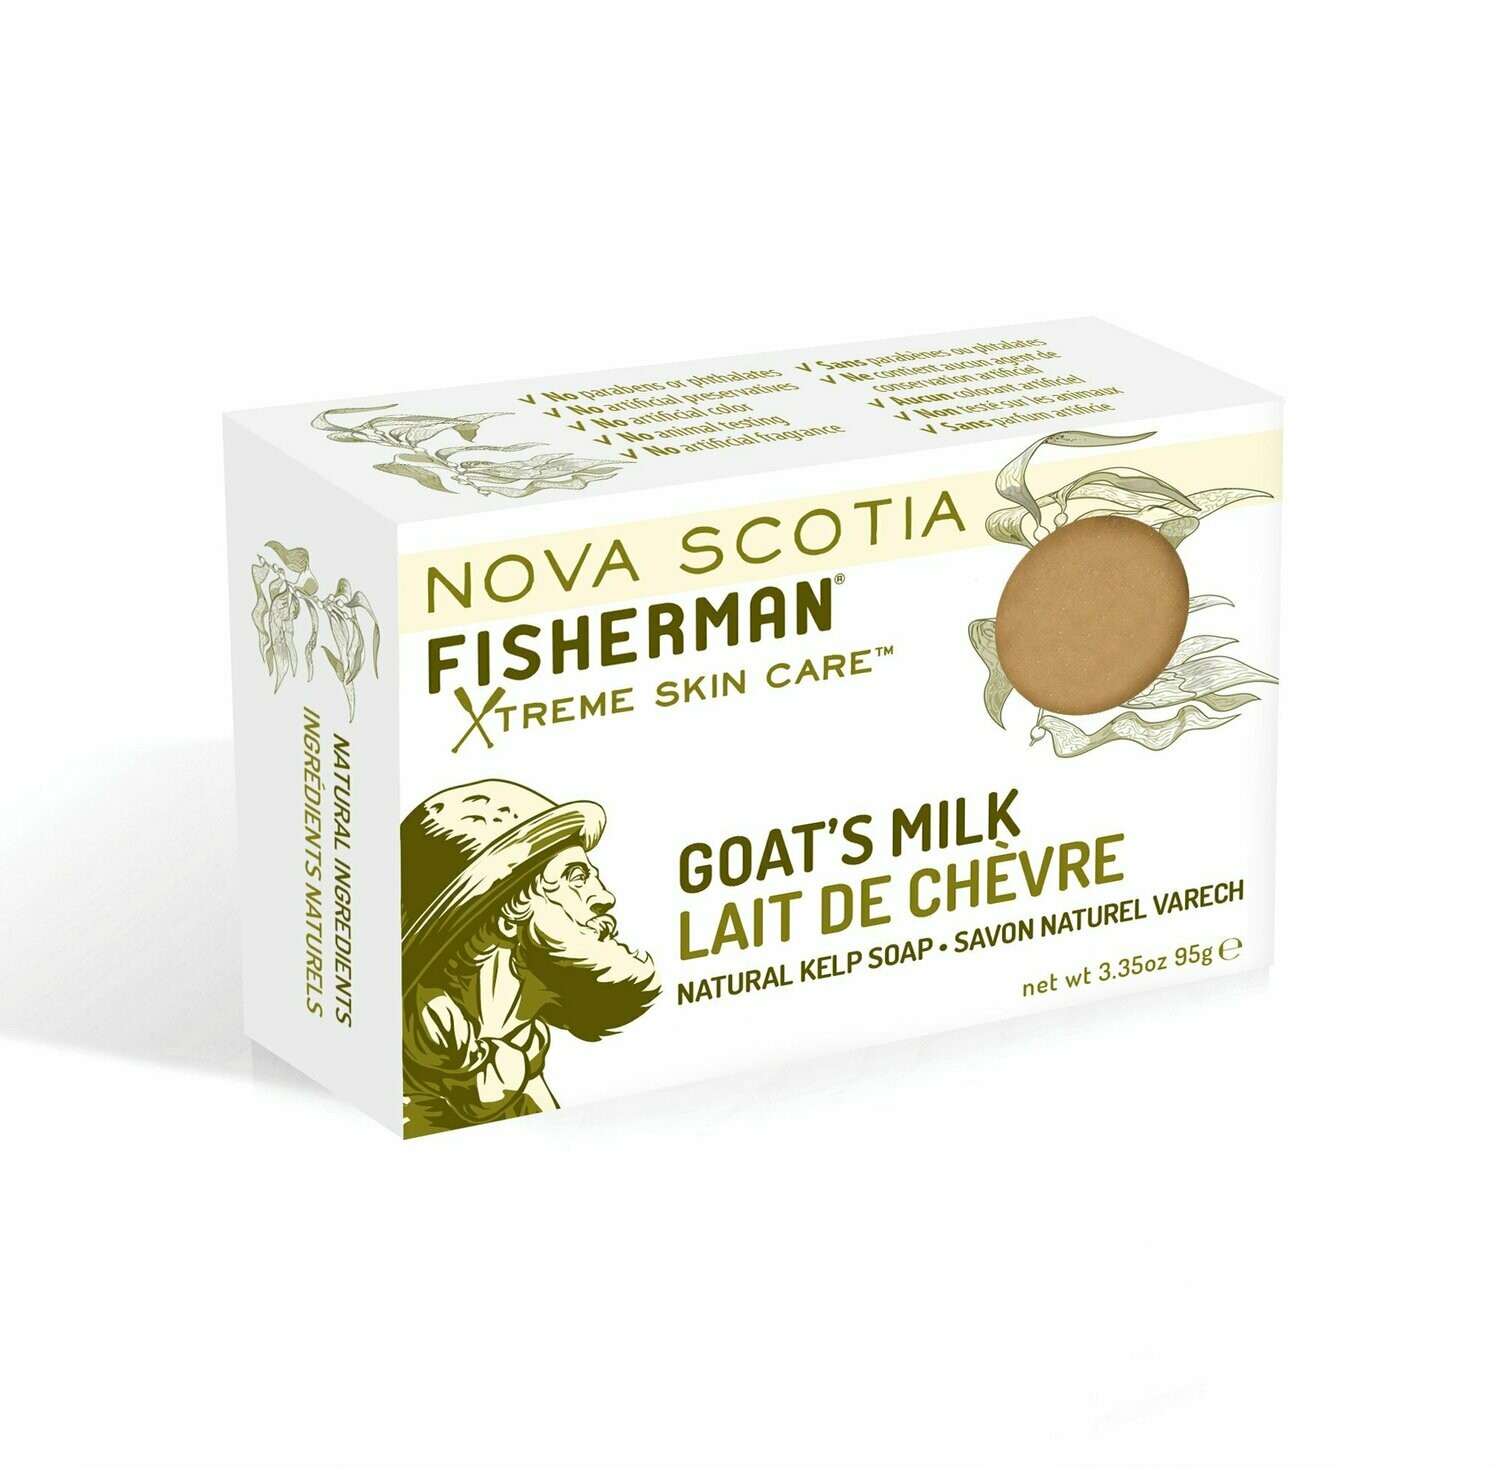 NS Fisherman Goat Milk Soap